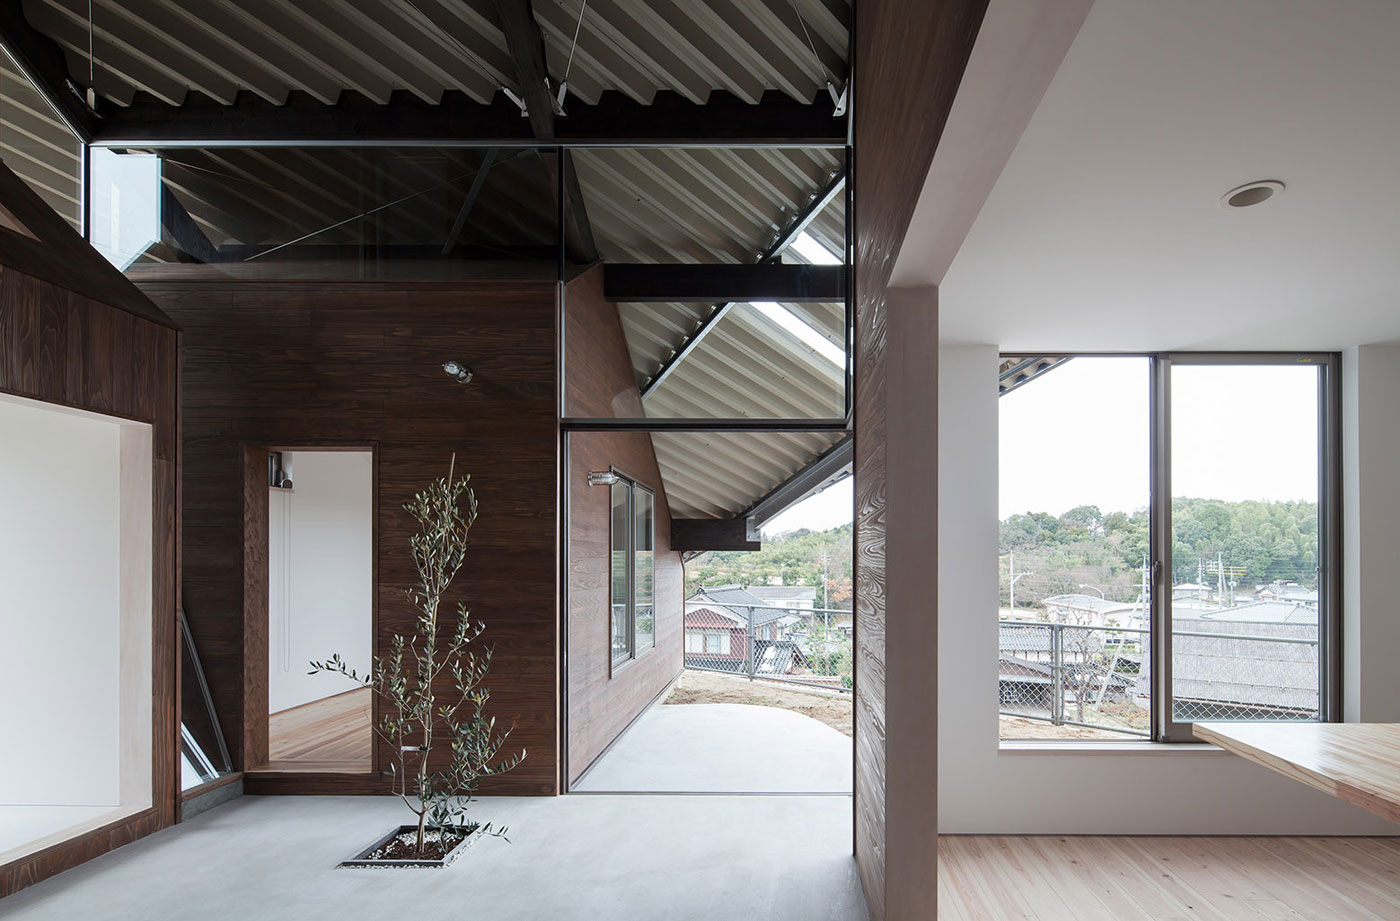 Architects: Y+M Design Office. Location: Yonago, Japan. Photographer: Yohei Sasakura